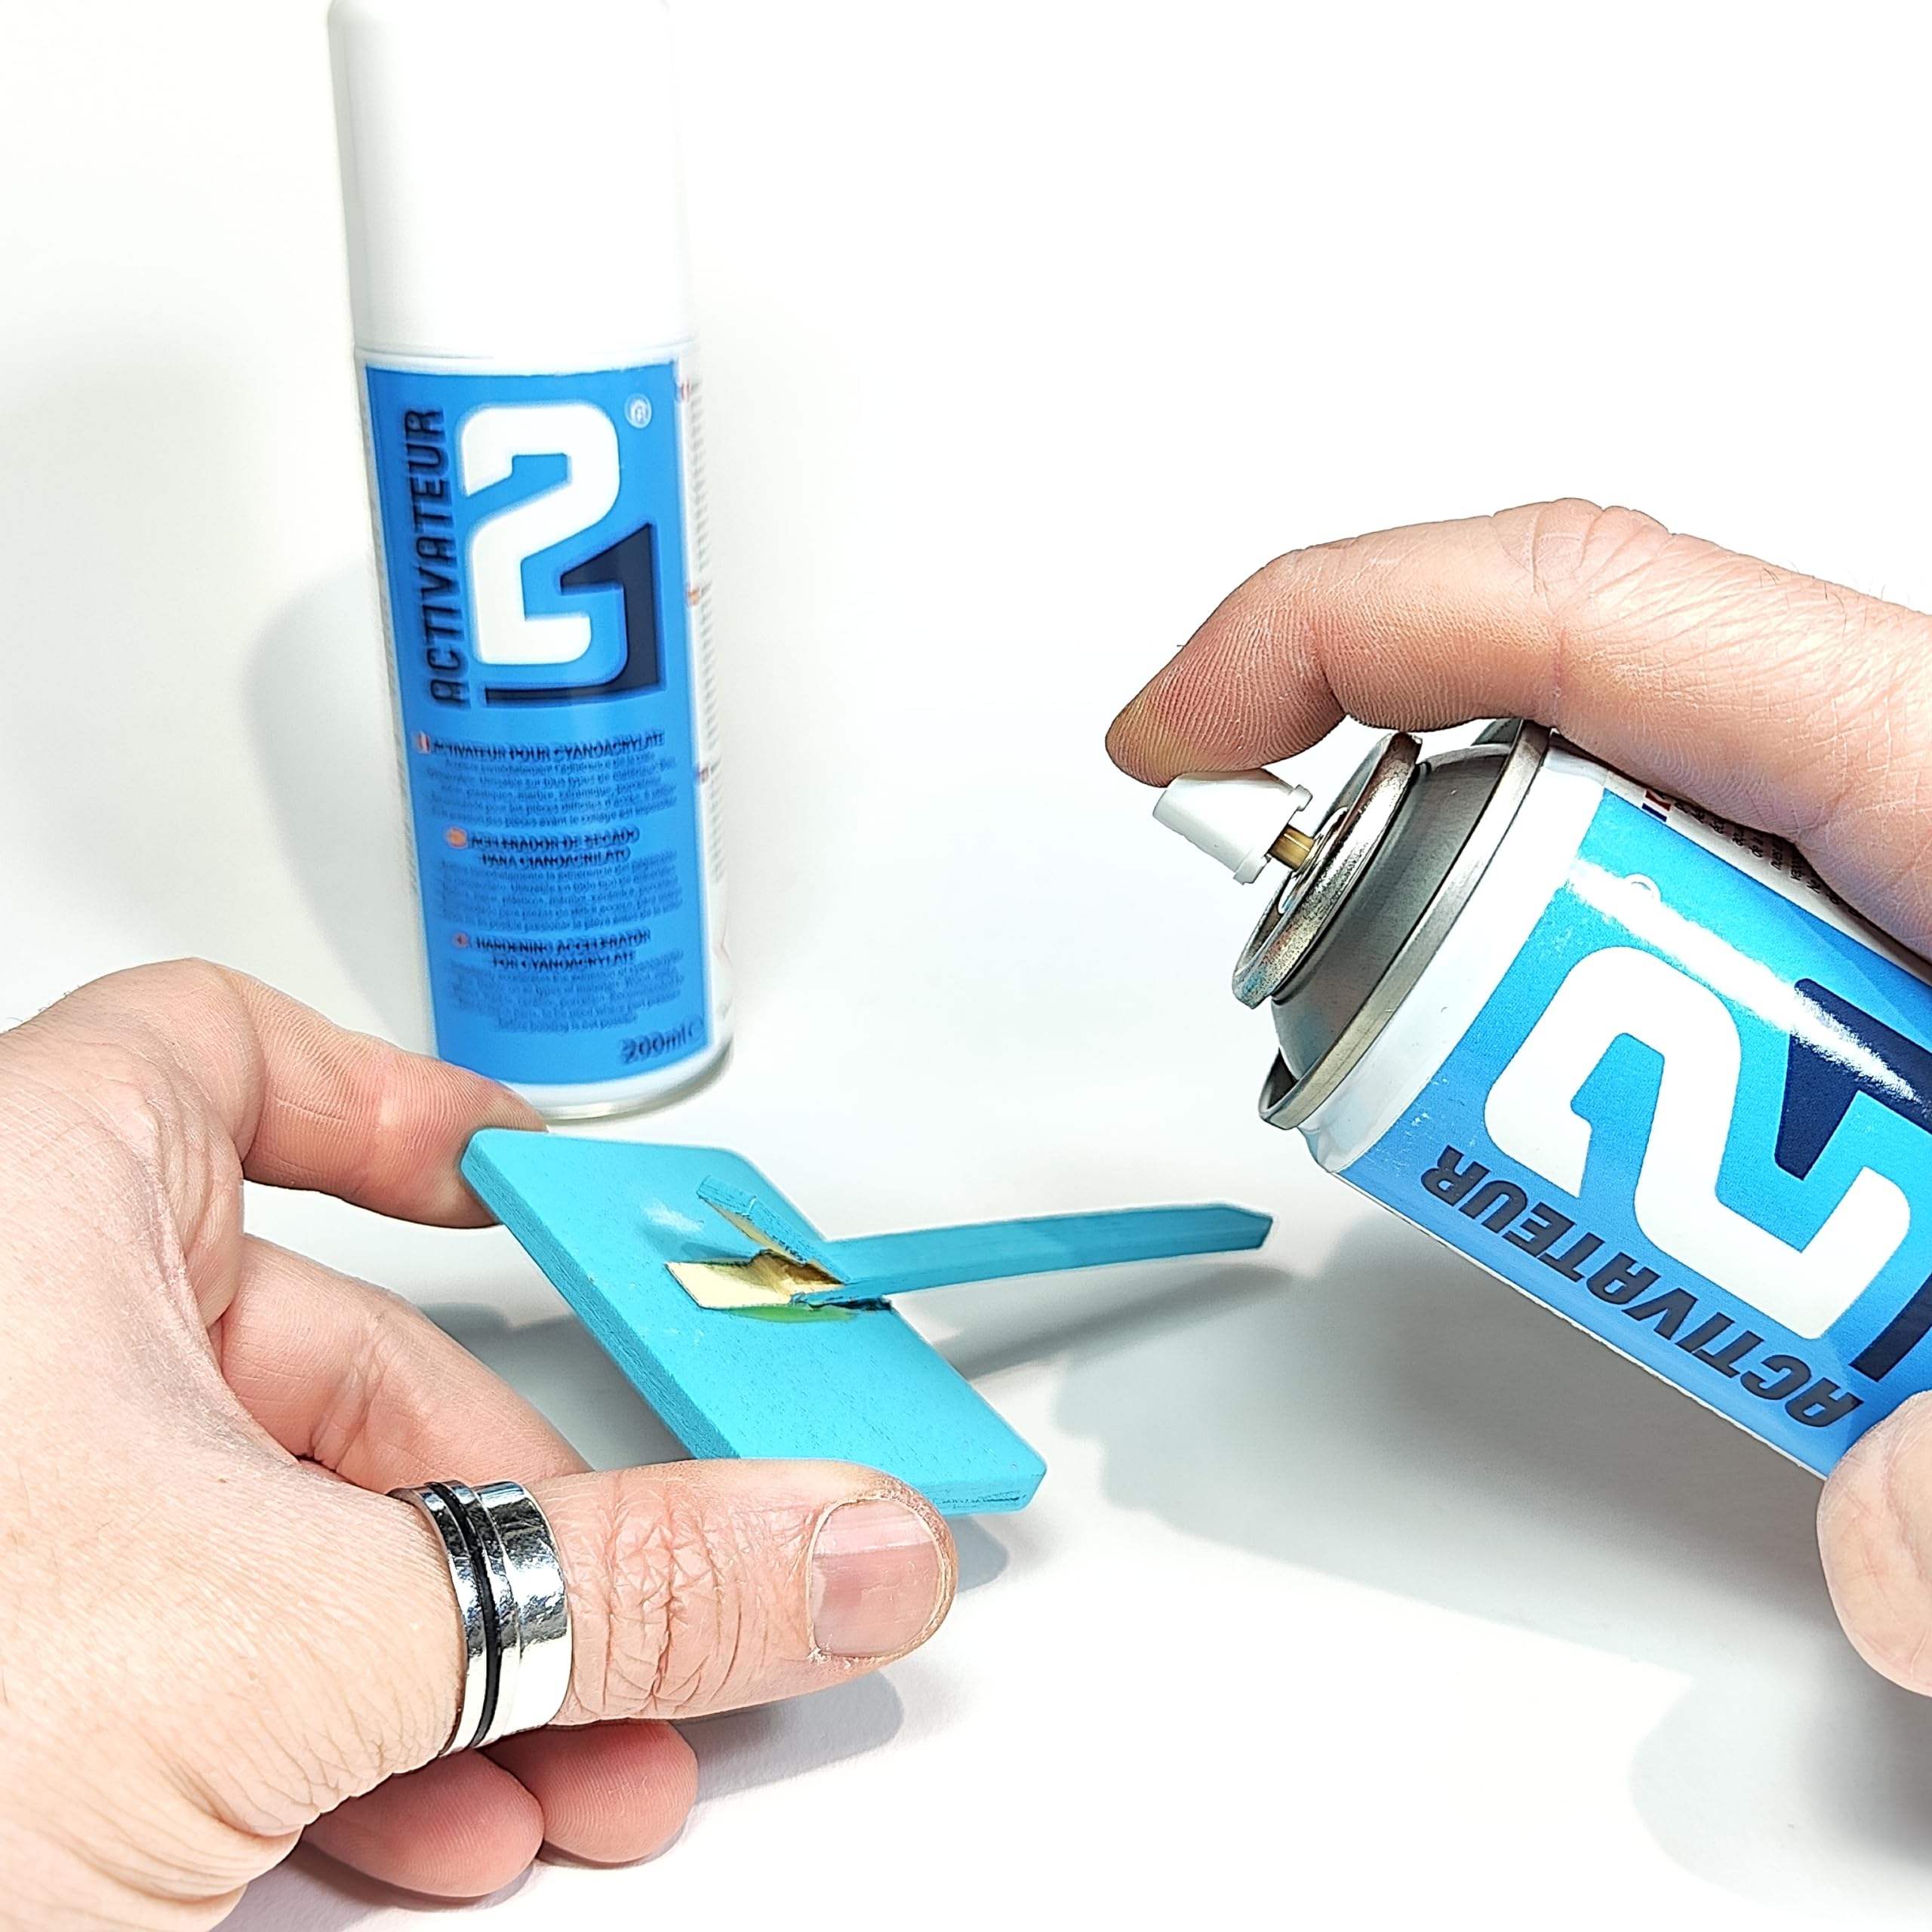 Activator21 spray - 200ml - to speed up the glueing of glue21, cyanoacrylato super glue.